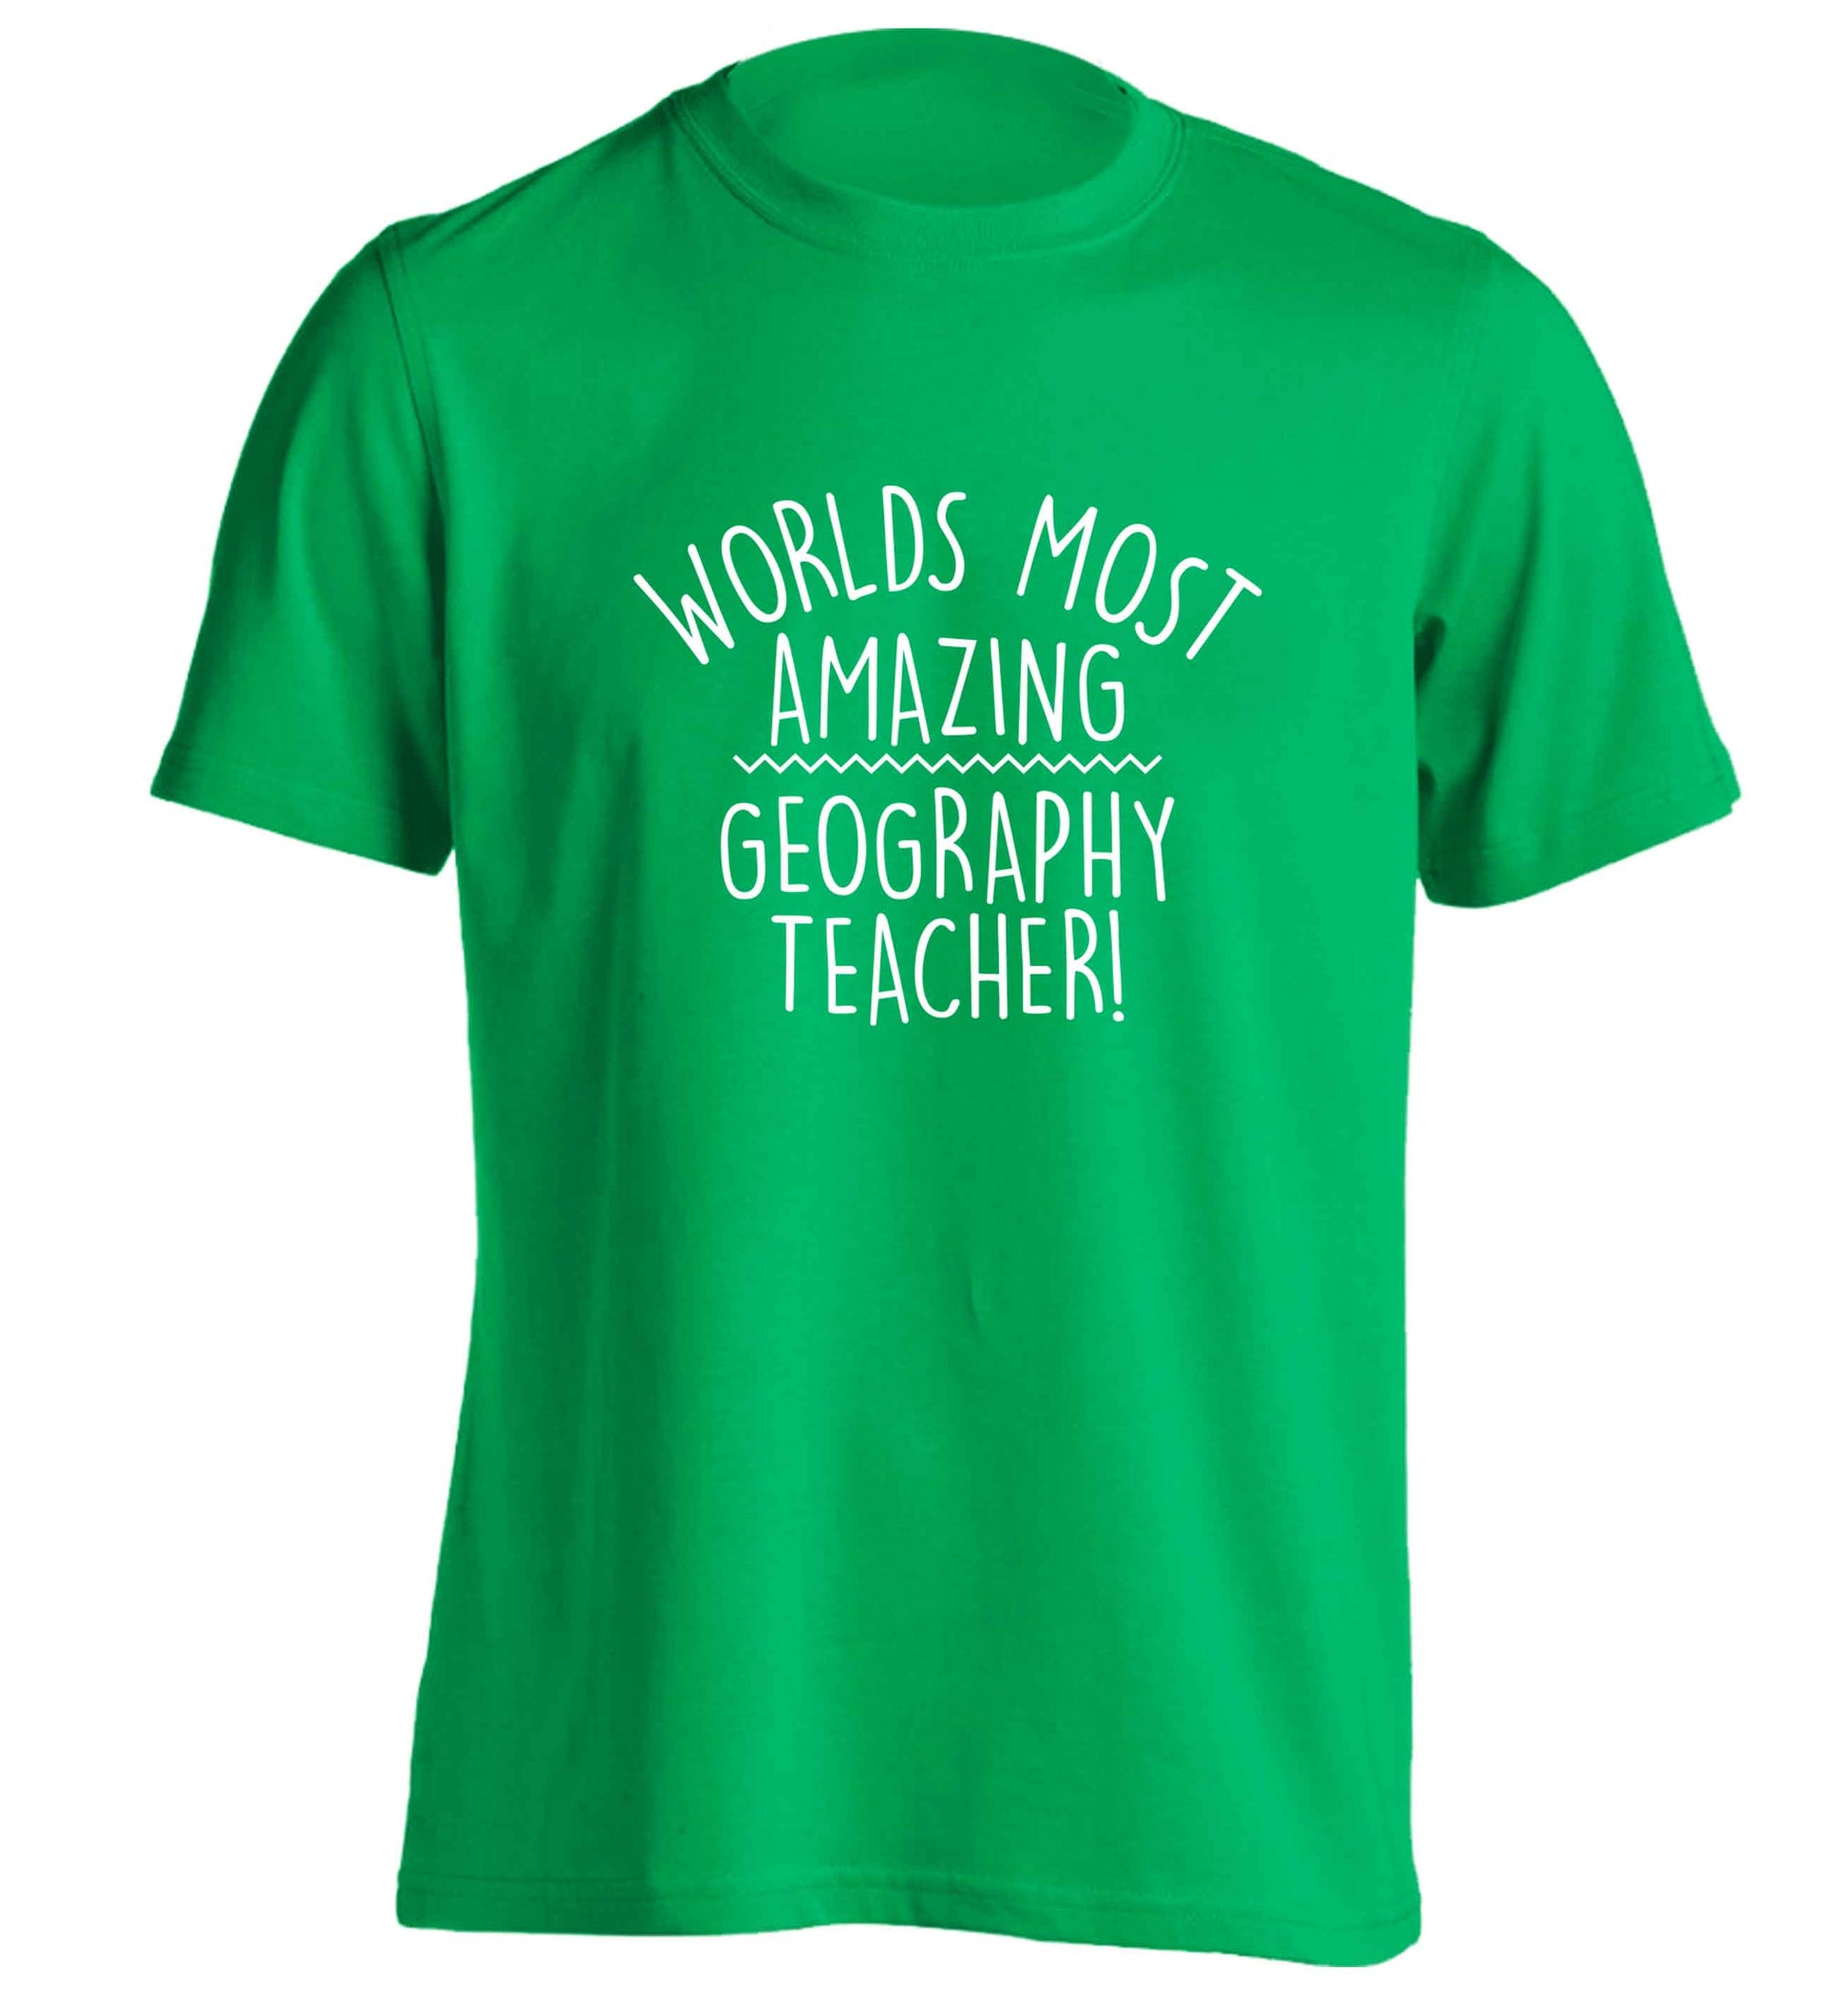 Worlds most amazing geography teacher adults unisex green Tshirt 2XL